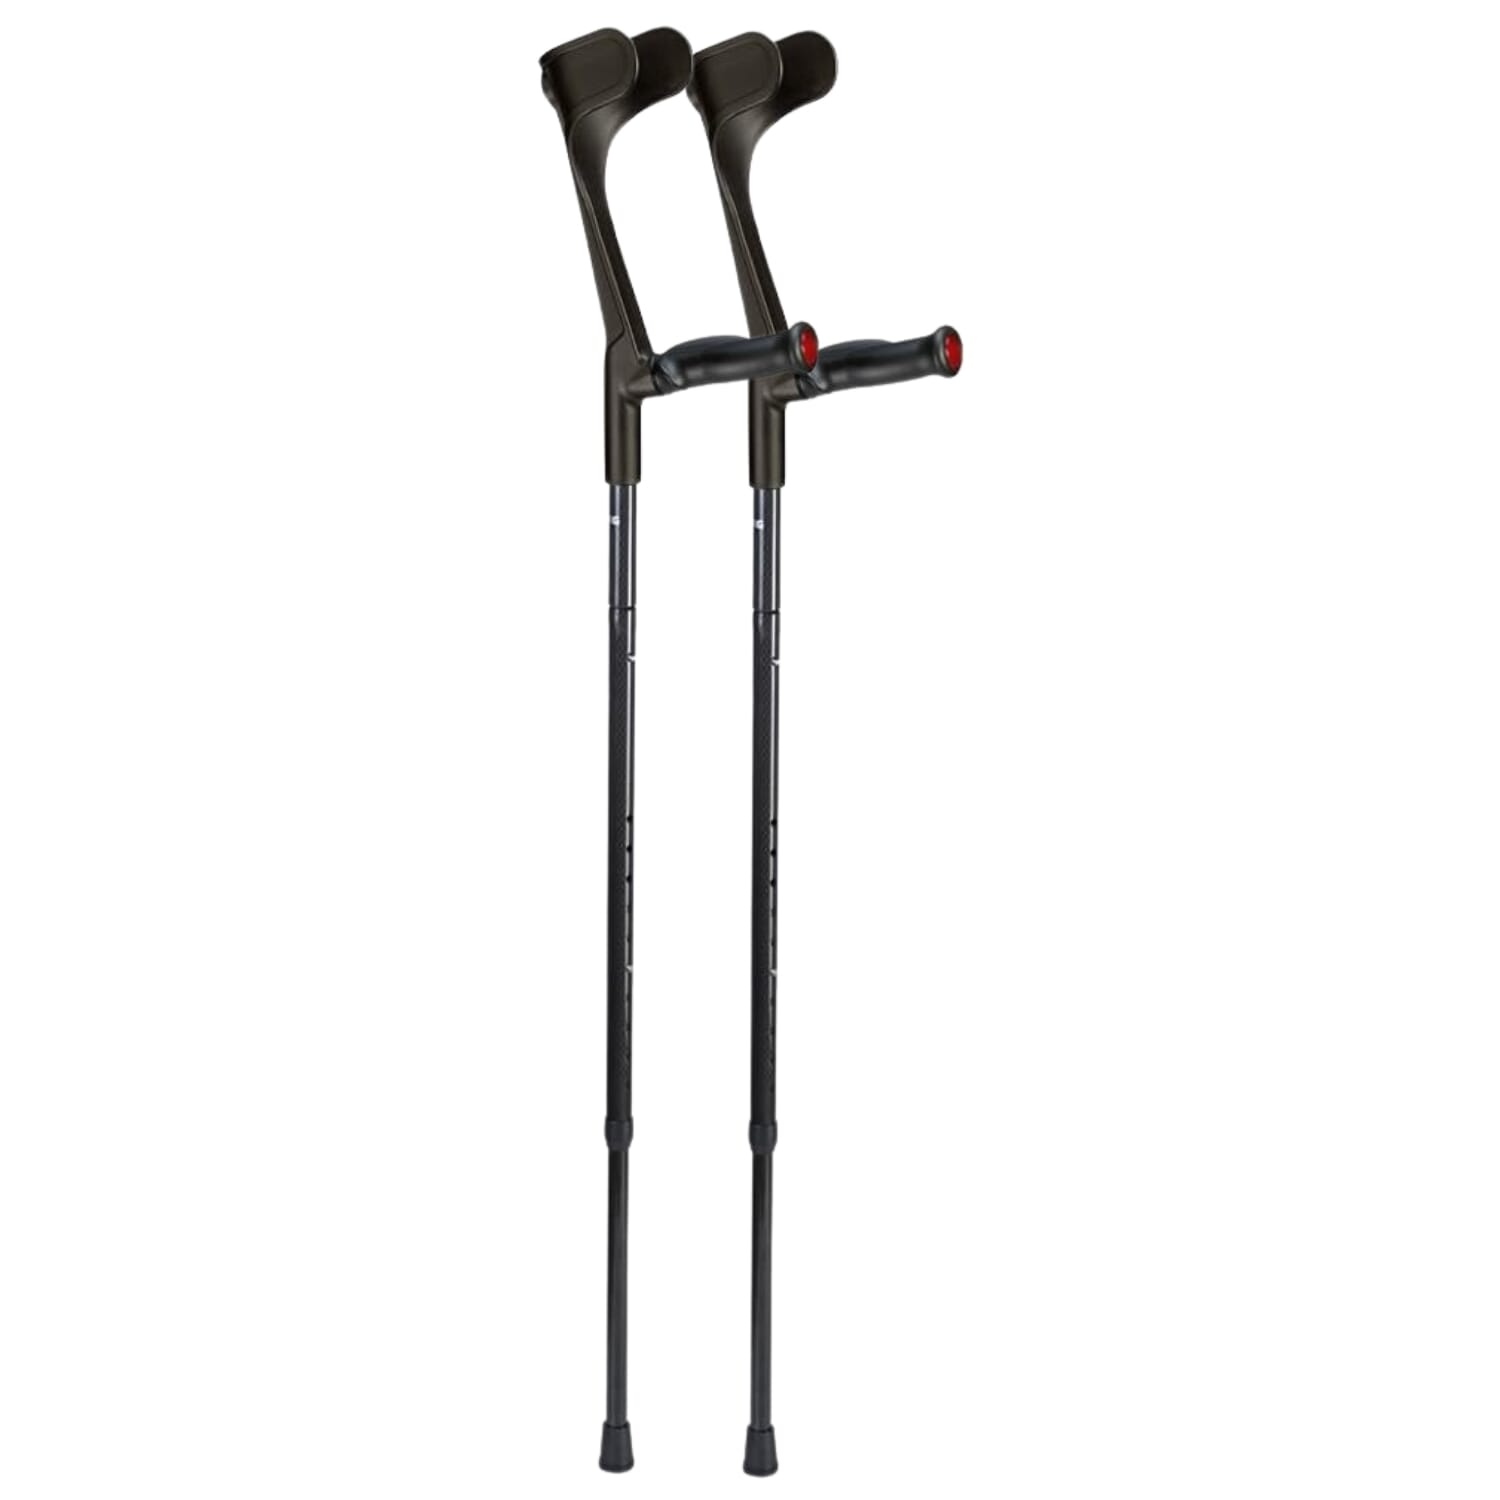 View Ossenberg Carbon Fibre Comfort Grip Folding Crutches Black Pair information